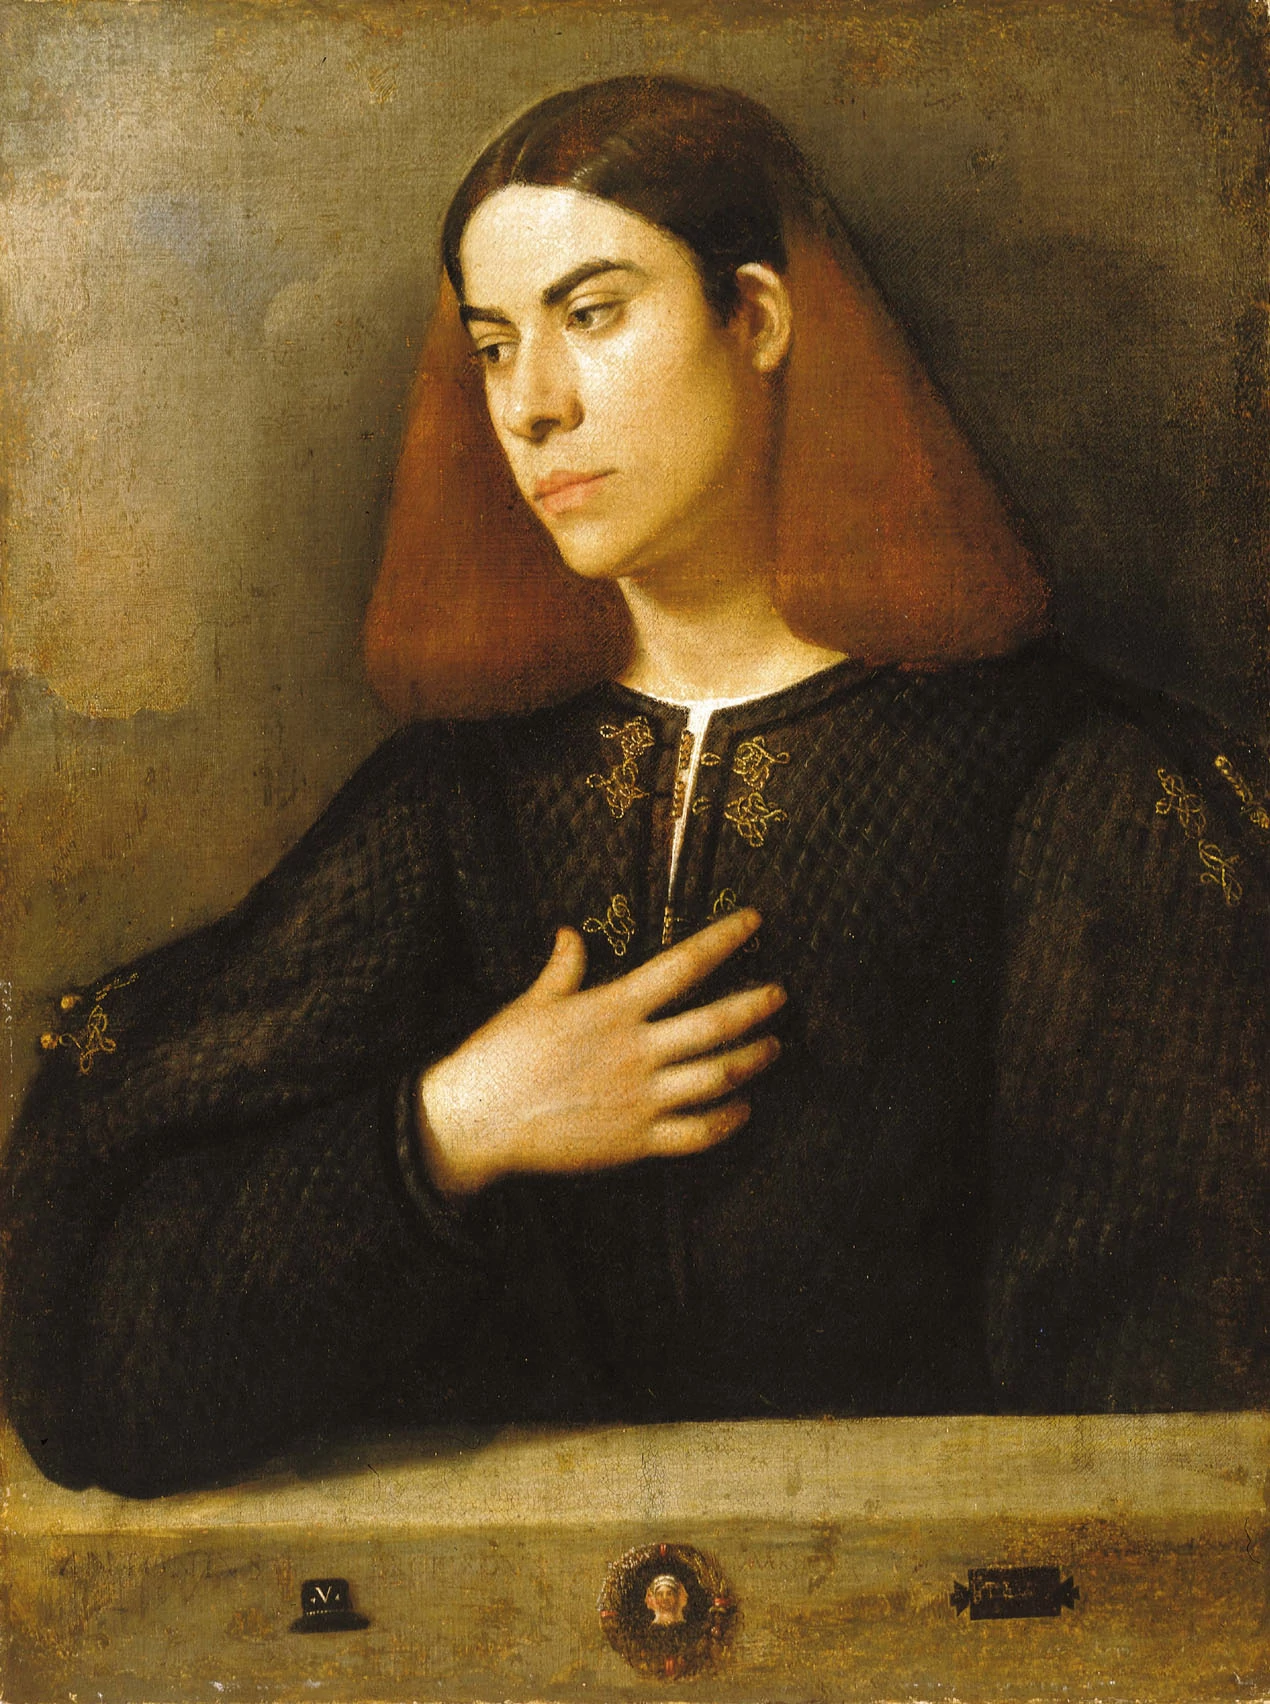 Portrait of a Young Man, Giorgione